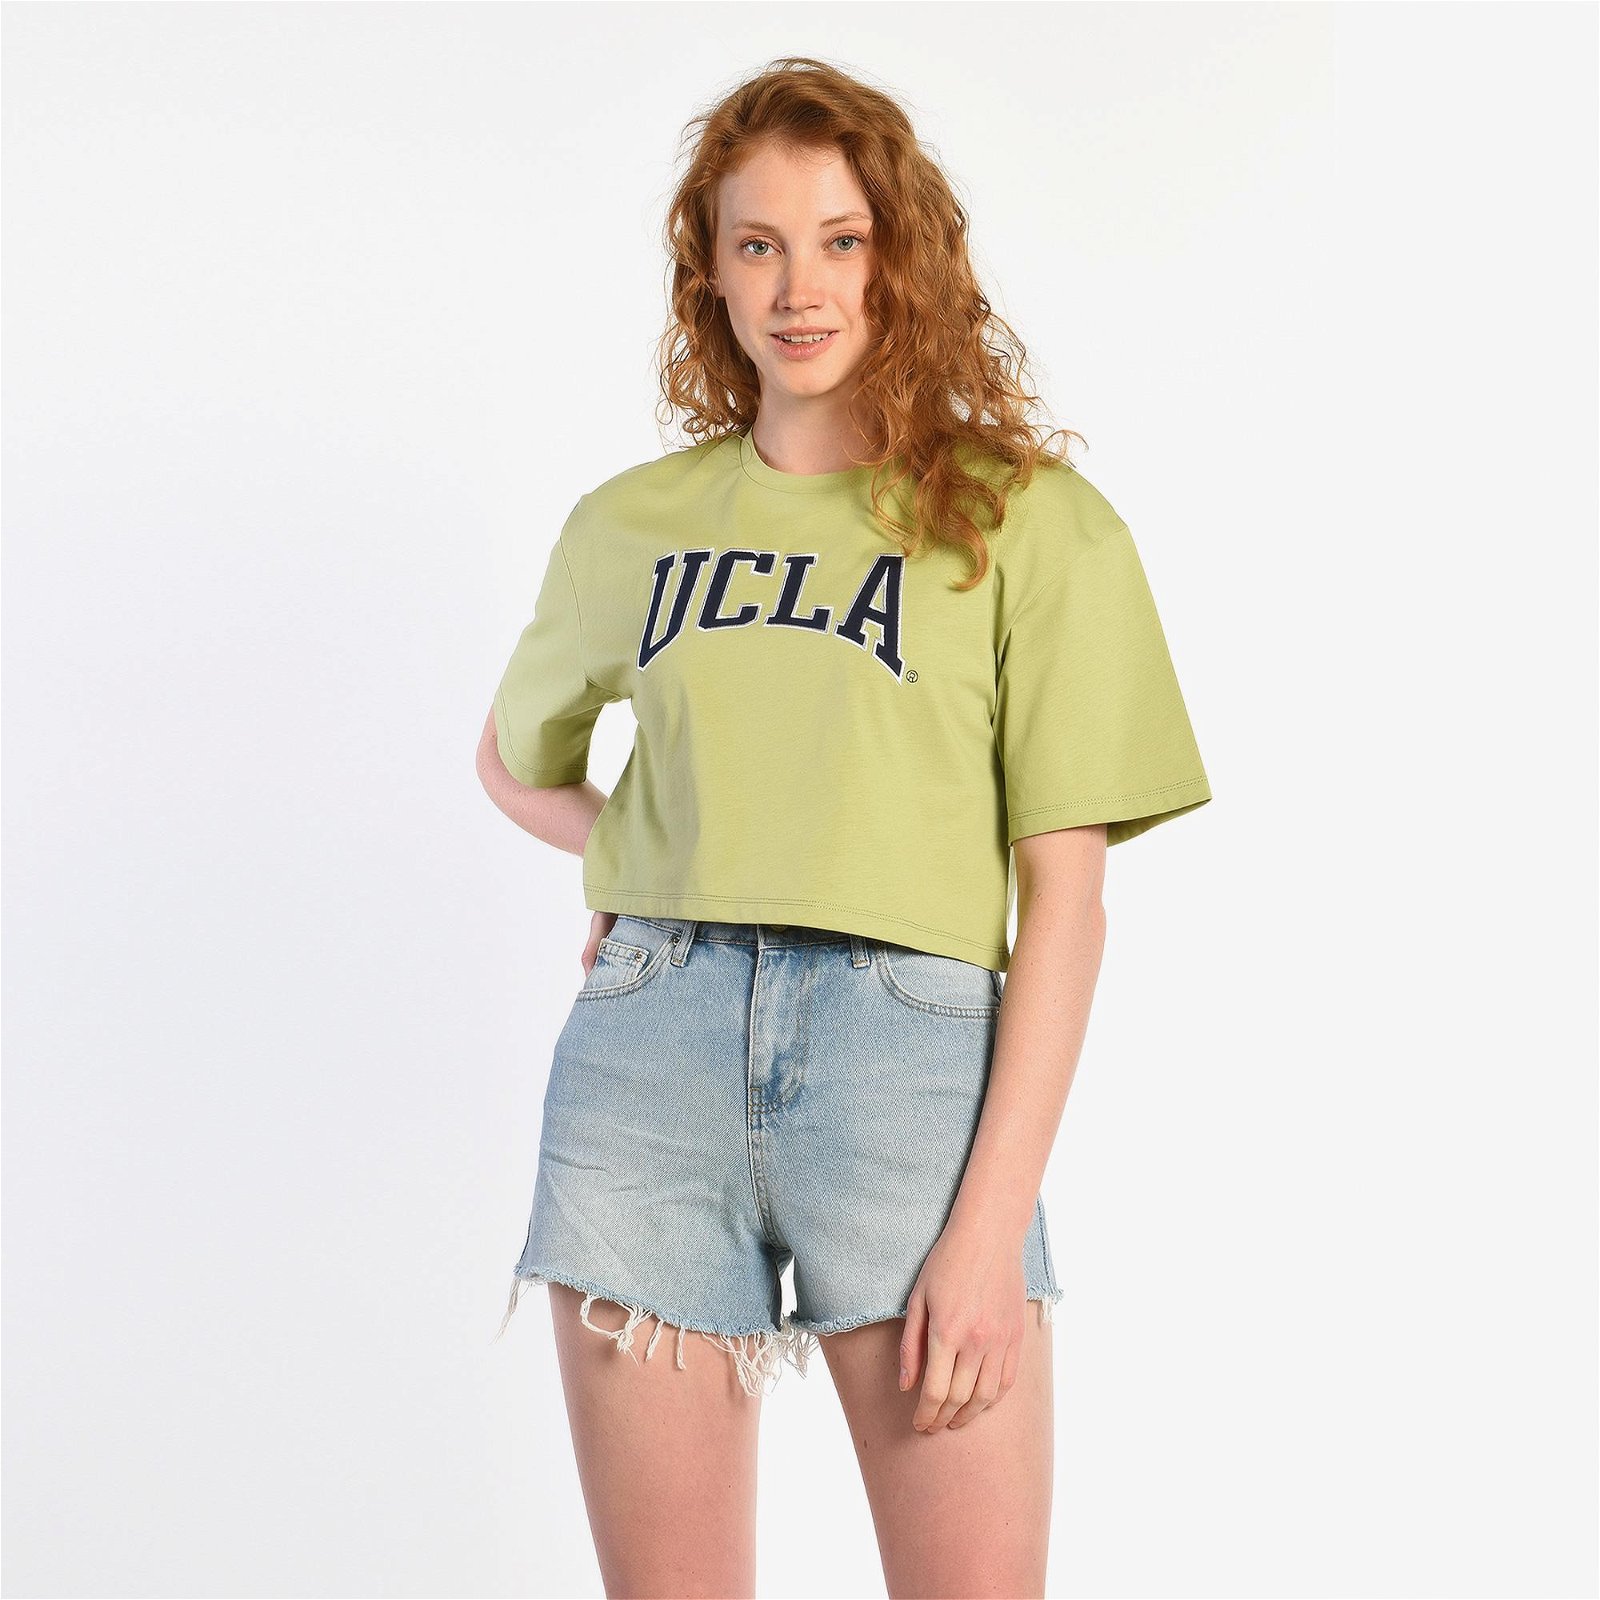 Ucla Helena Kadın Yeşil T-Shirt